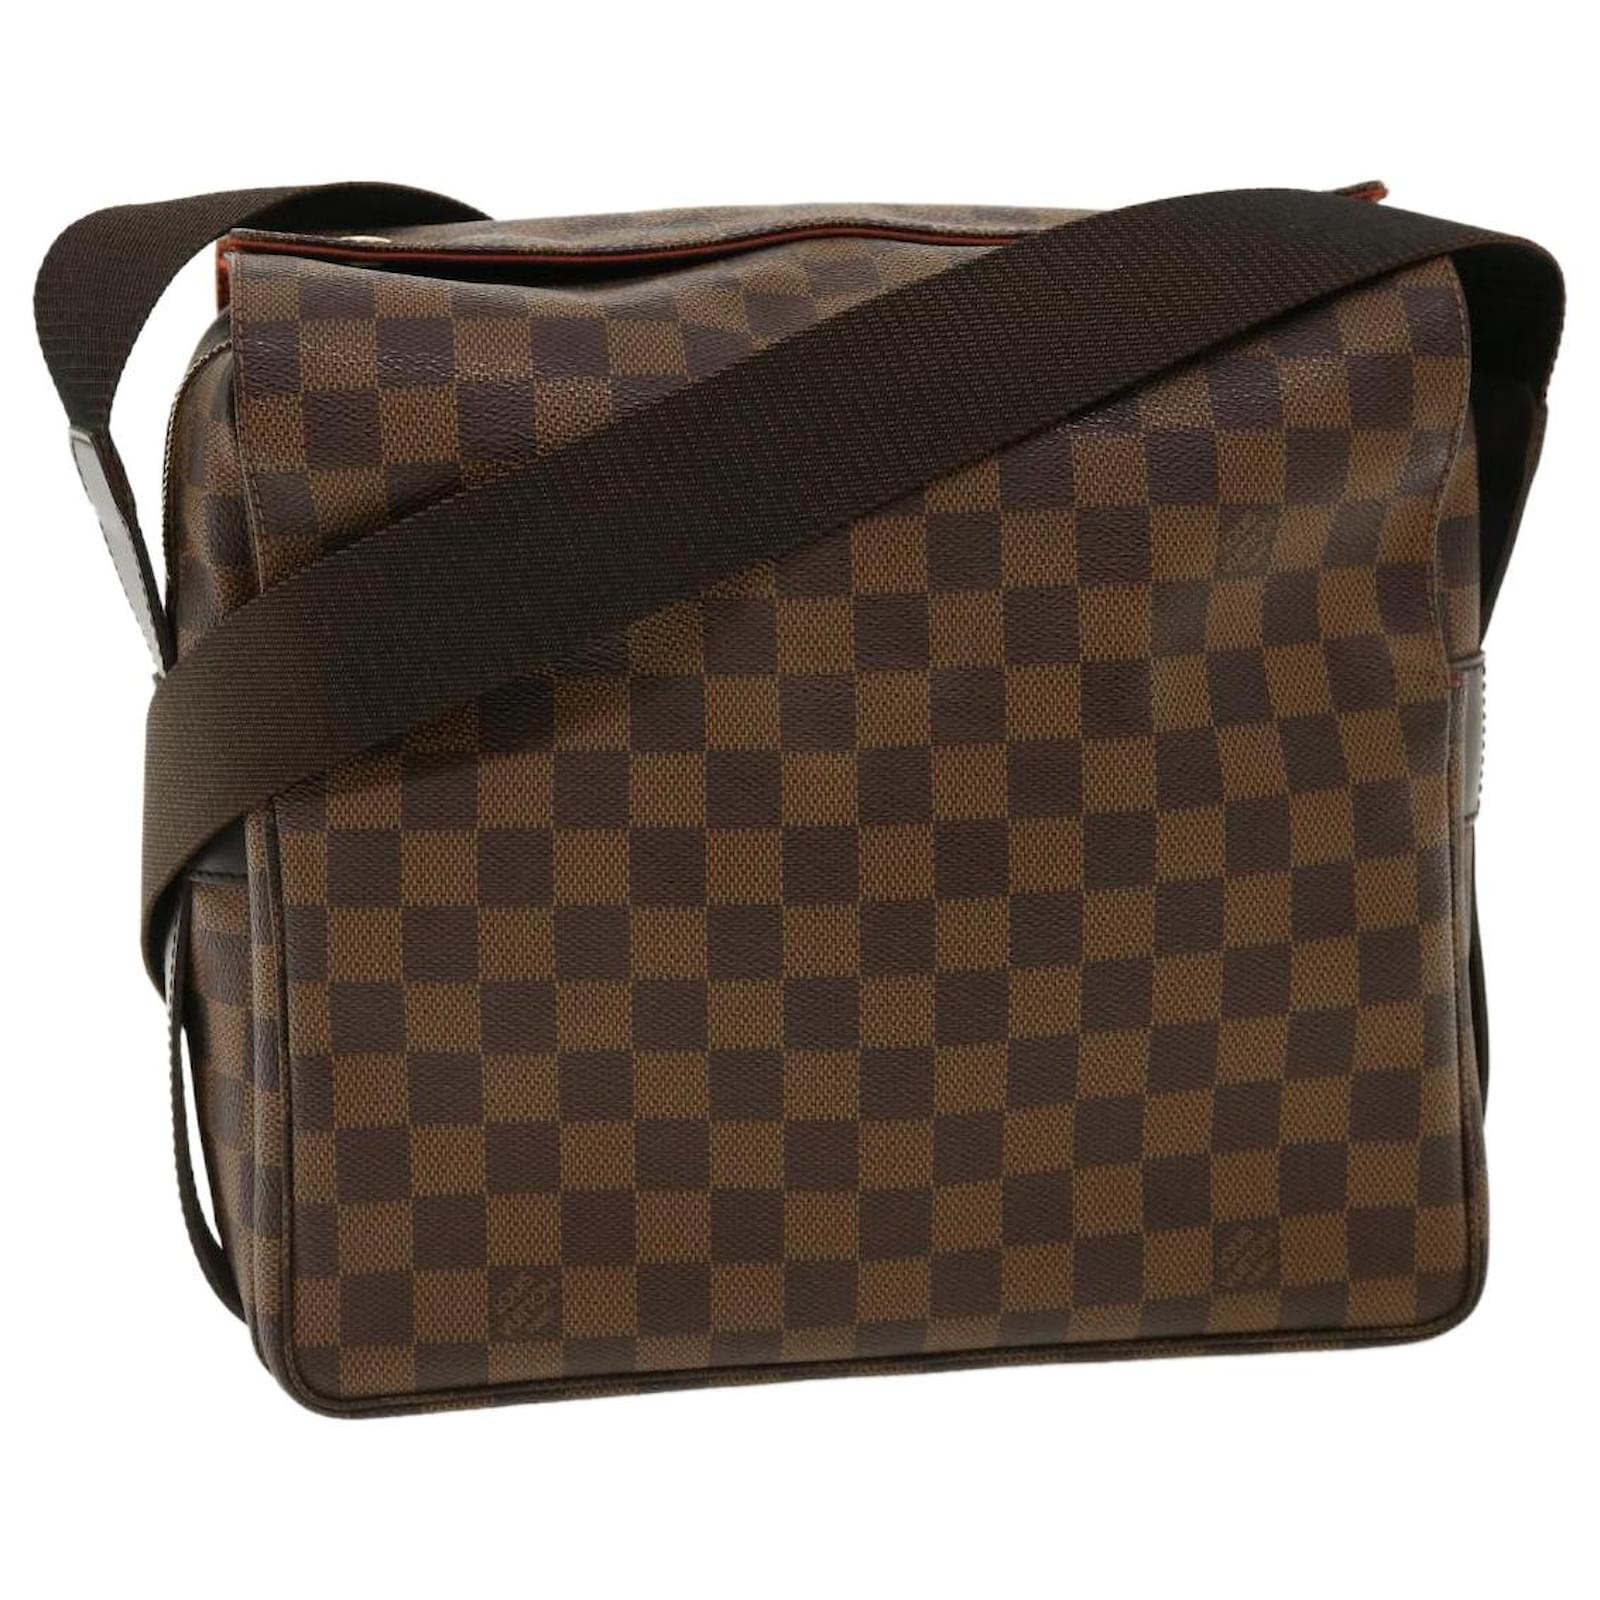 Louis Vuitton Naviglio Damier Ebene Canvas Messenger Bag on SALE